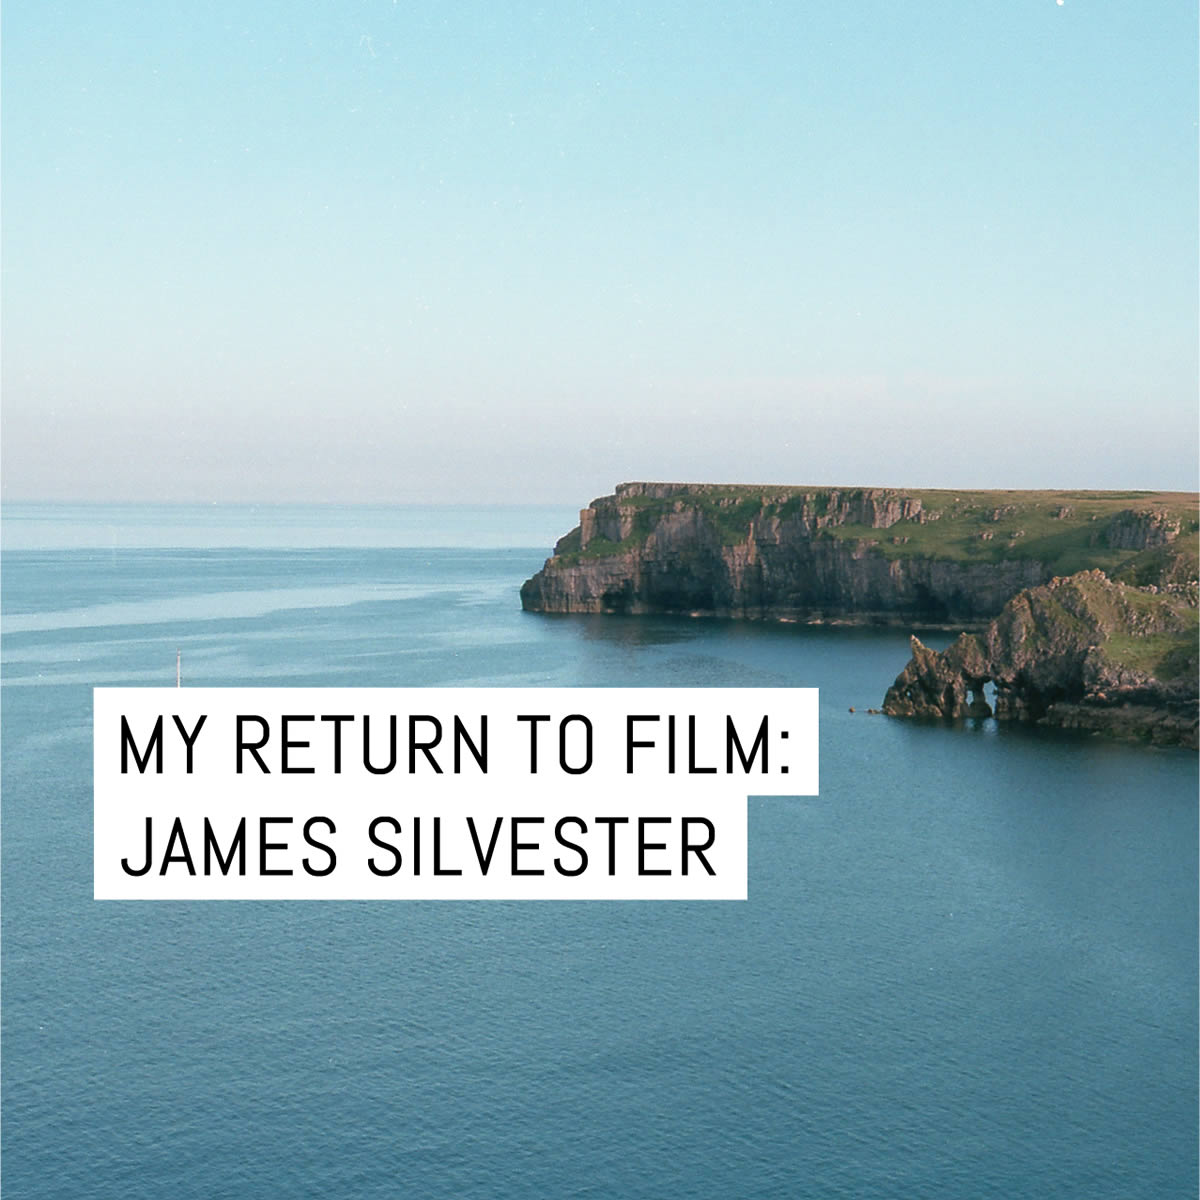 My return to film: James Silvester